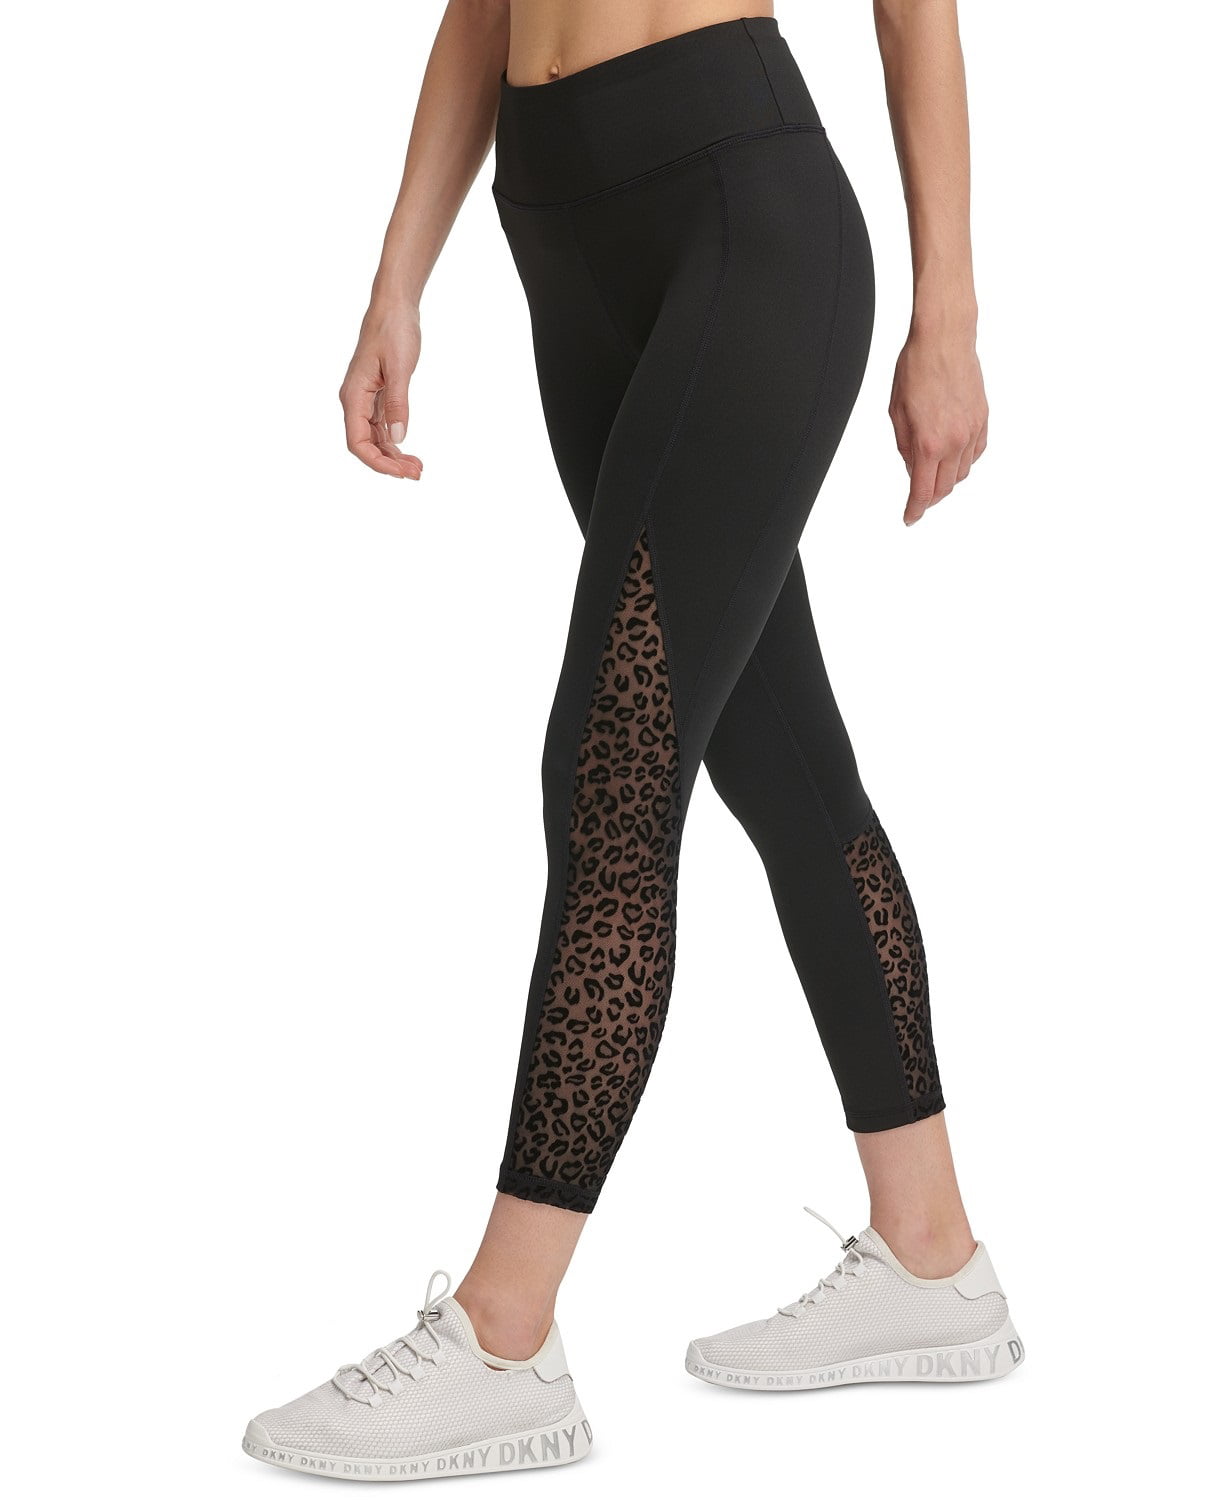 DKNY Women's Sport Tummy Control Workout Yoga Leggings, Black/White, X-Small